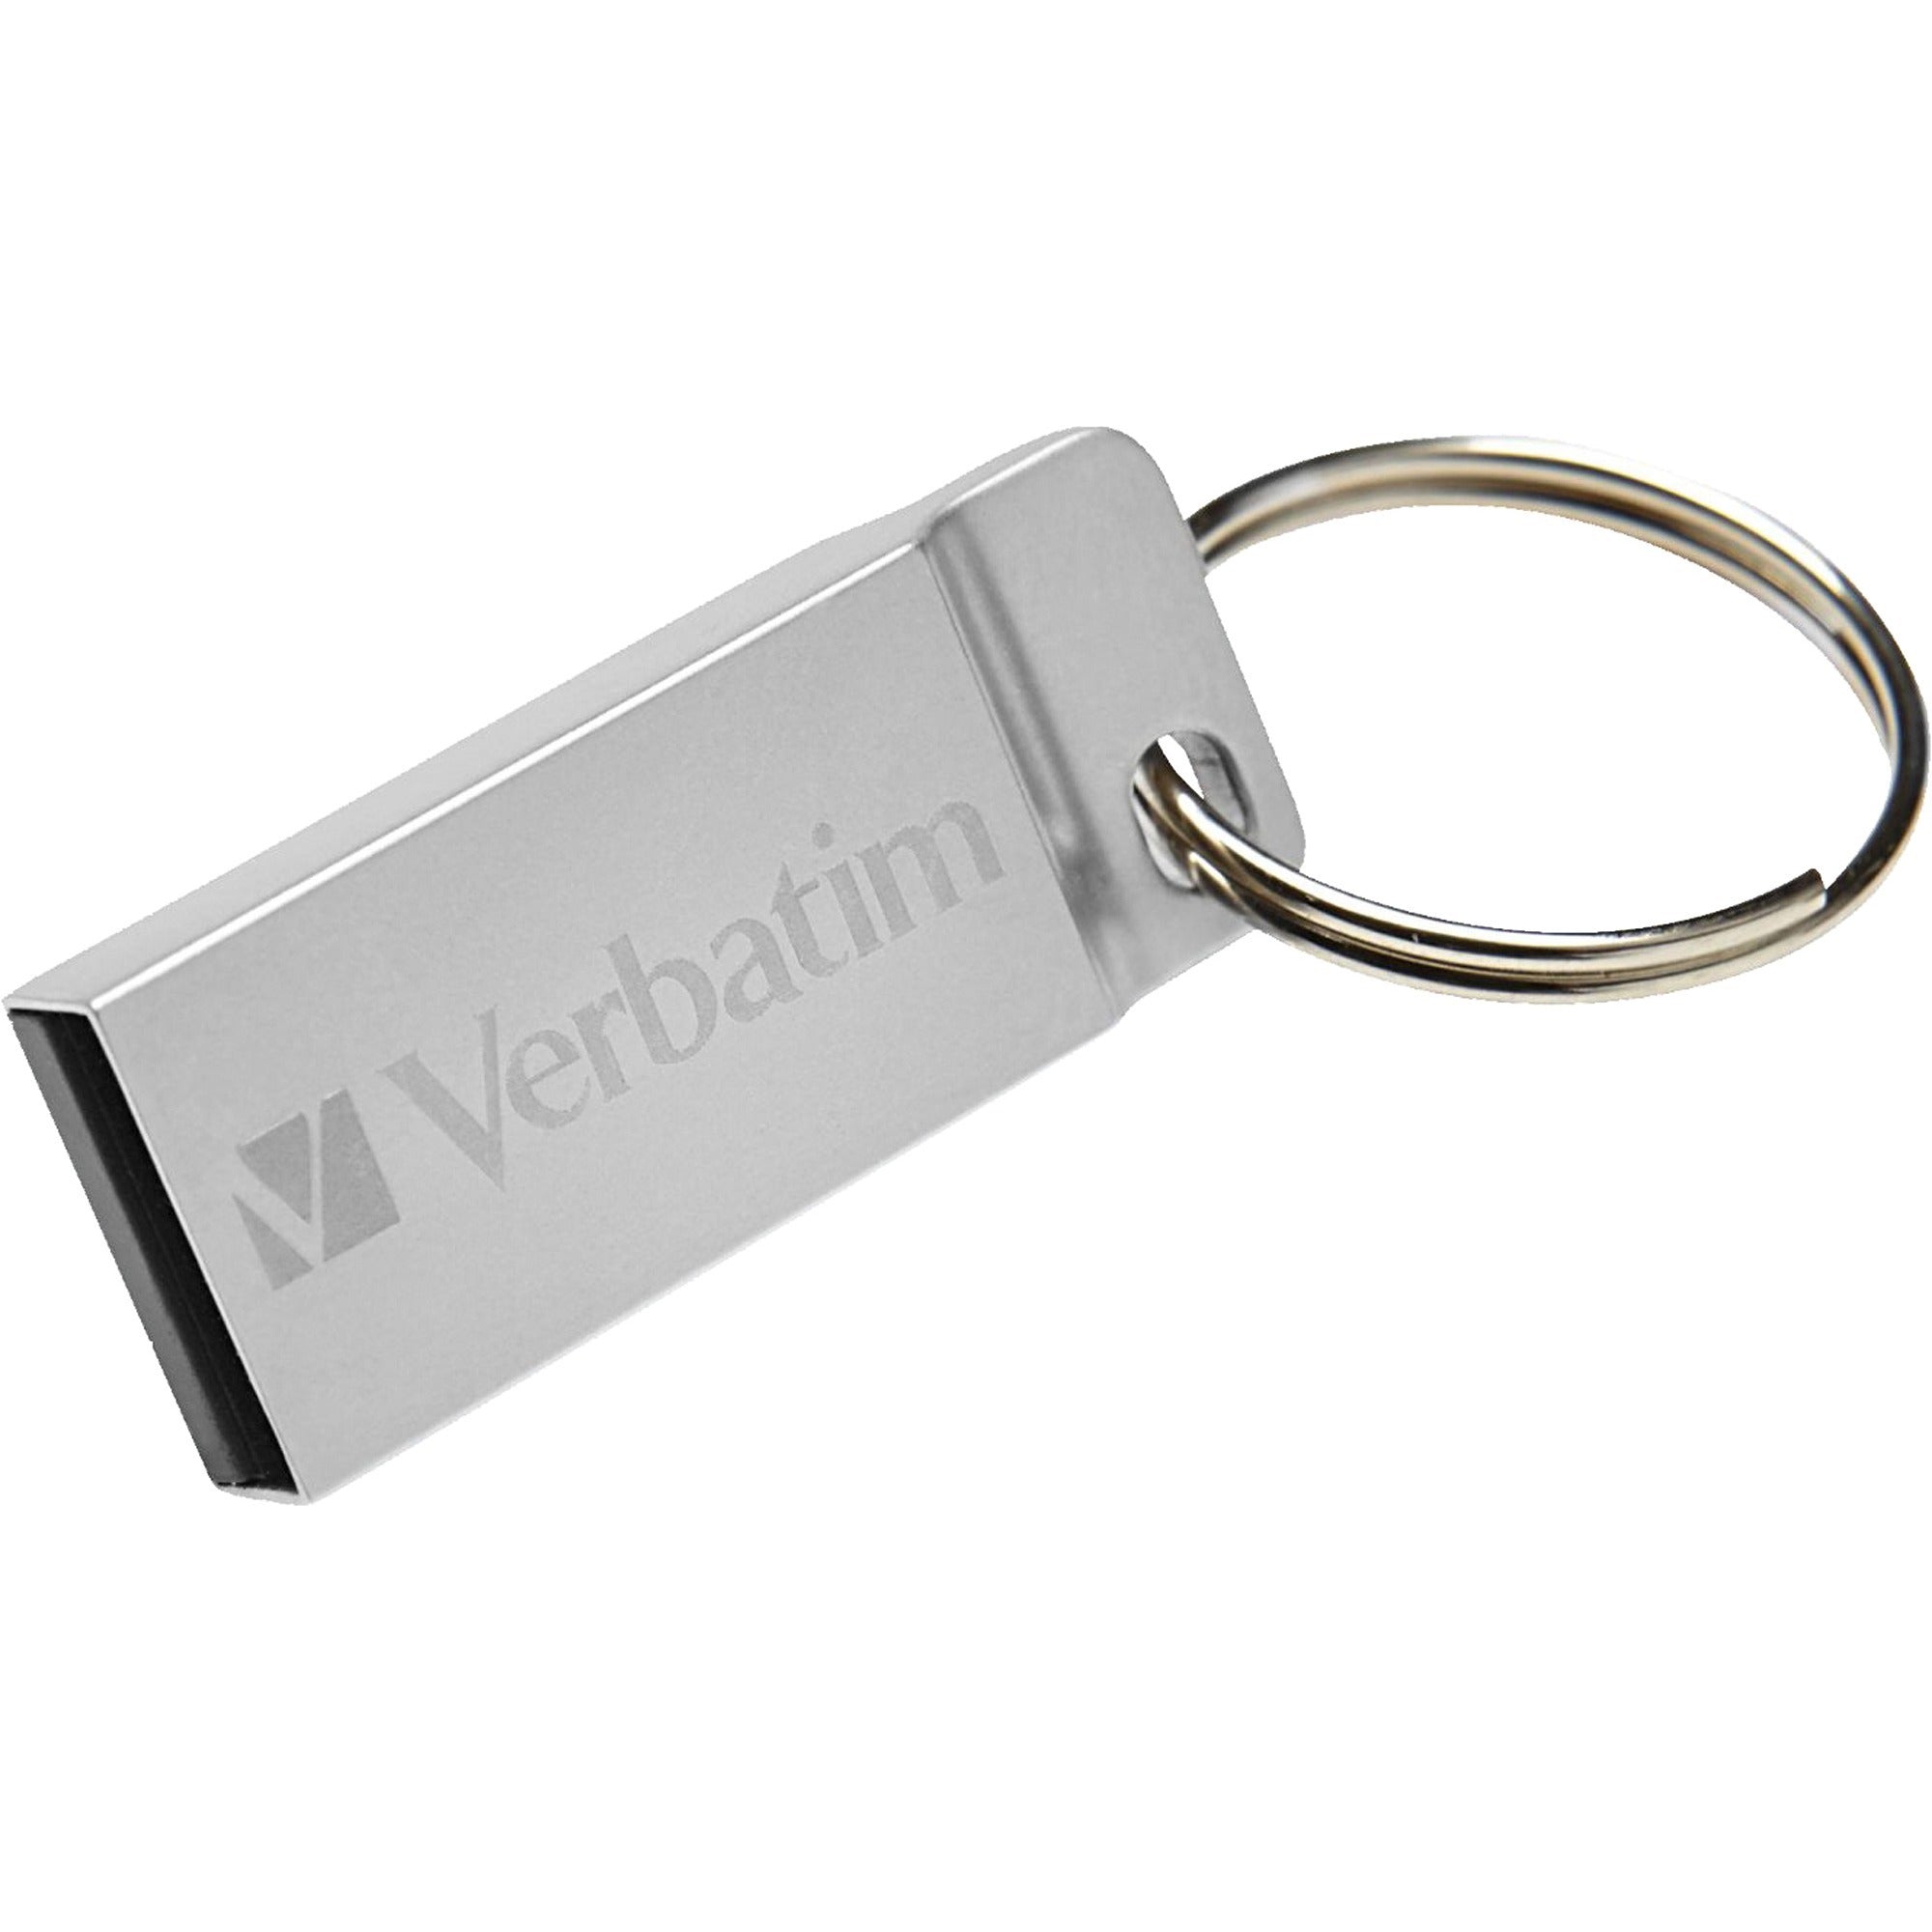 verbatim-64gb-metal-executive-usb-flash-drive-silver-64-gbusb-silver_ver98750 - 1